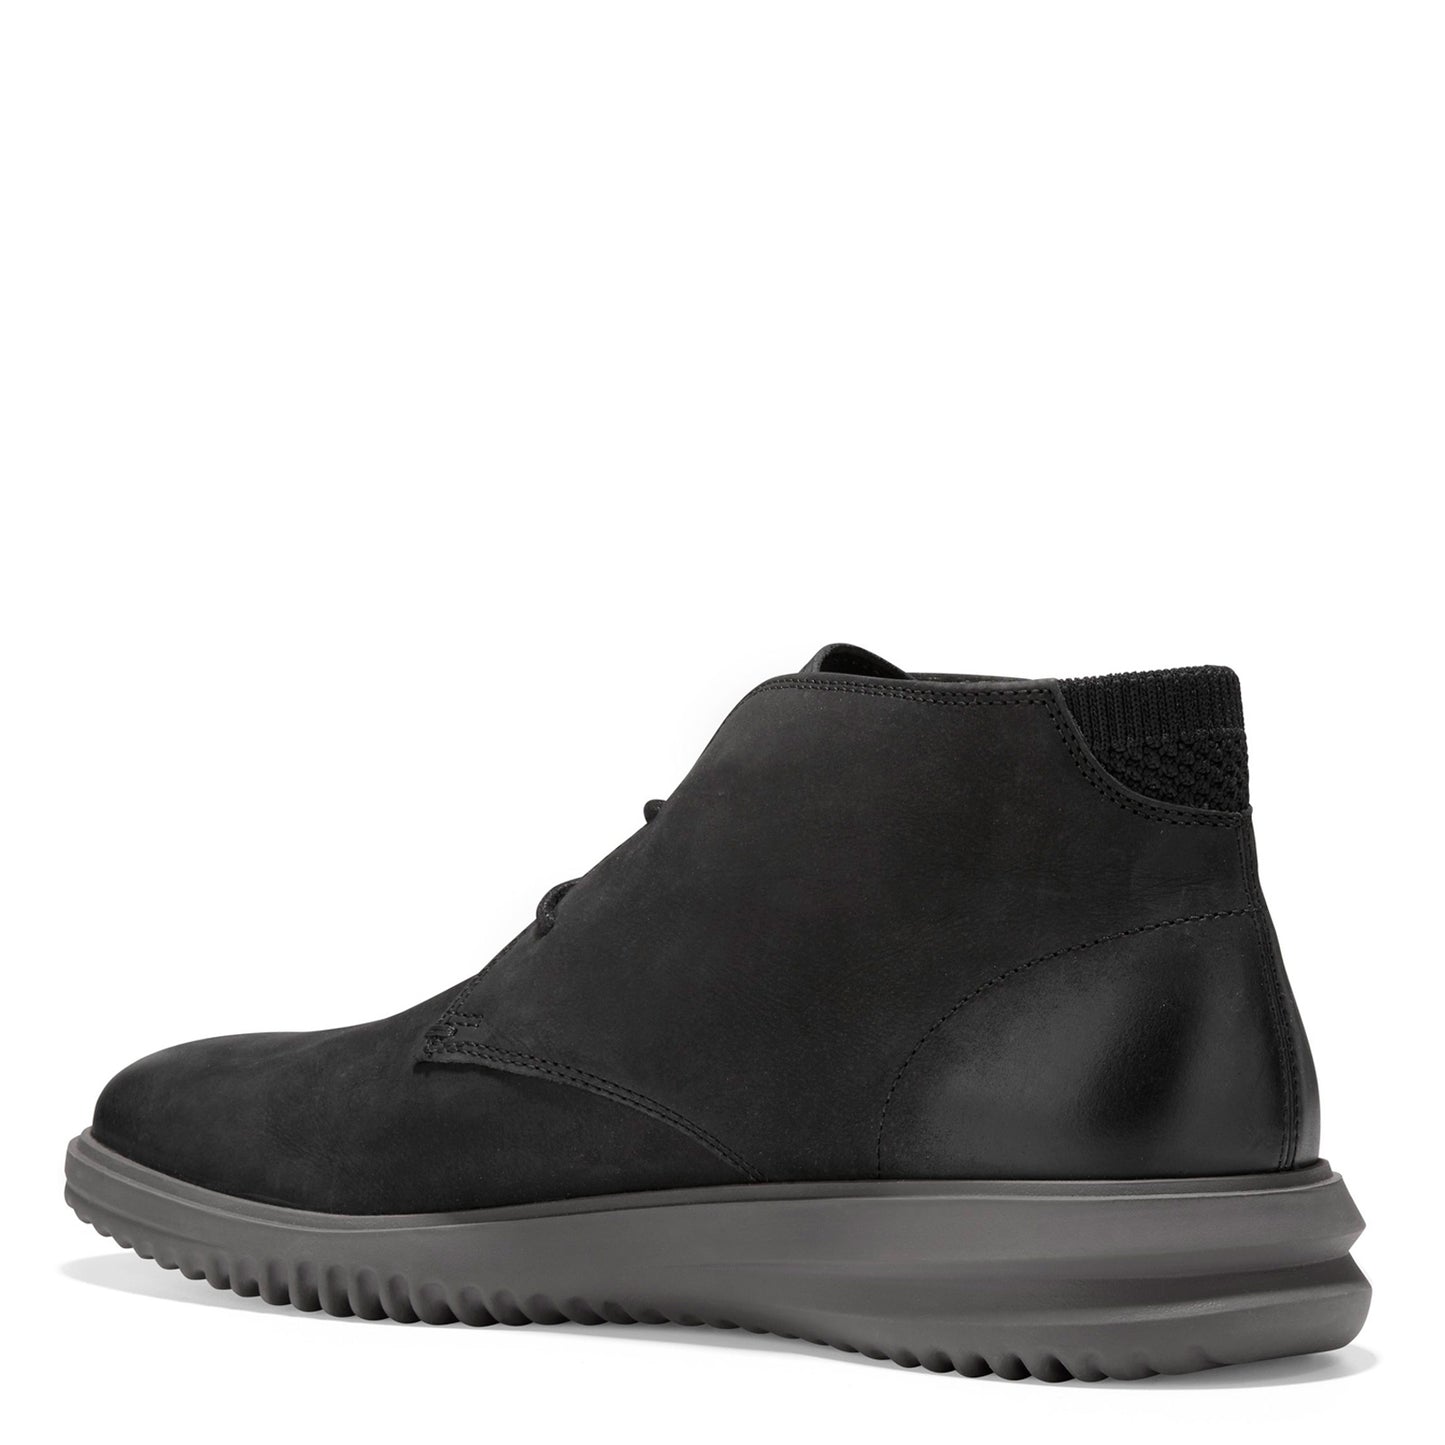 Peltz Shoes  Men's Cole Haan Grand+ Chukka Boot Black Nubuck/Black C36921